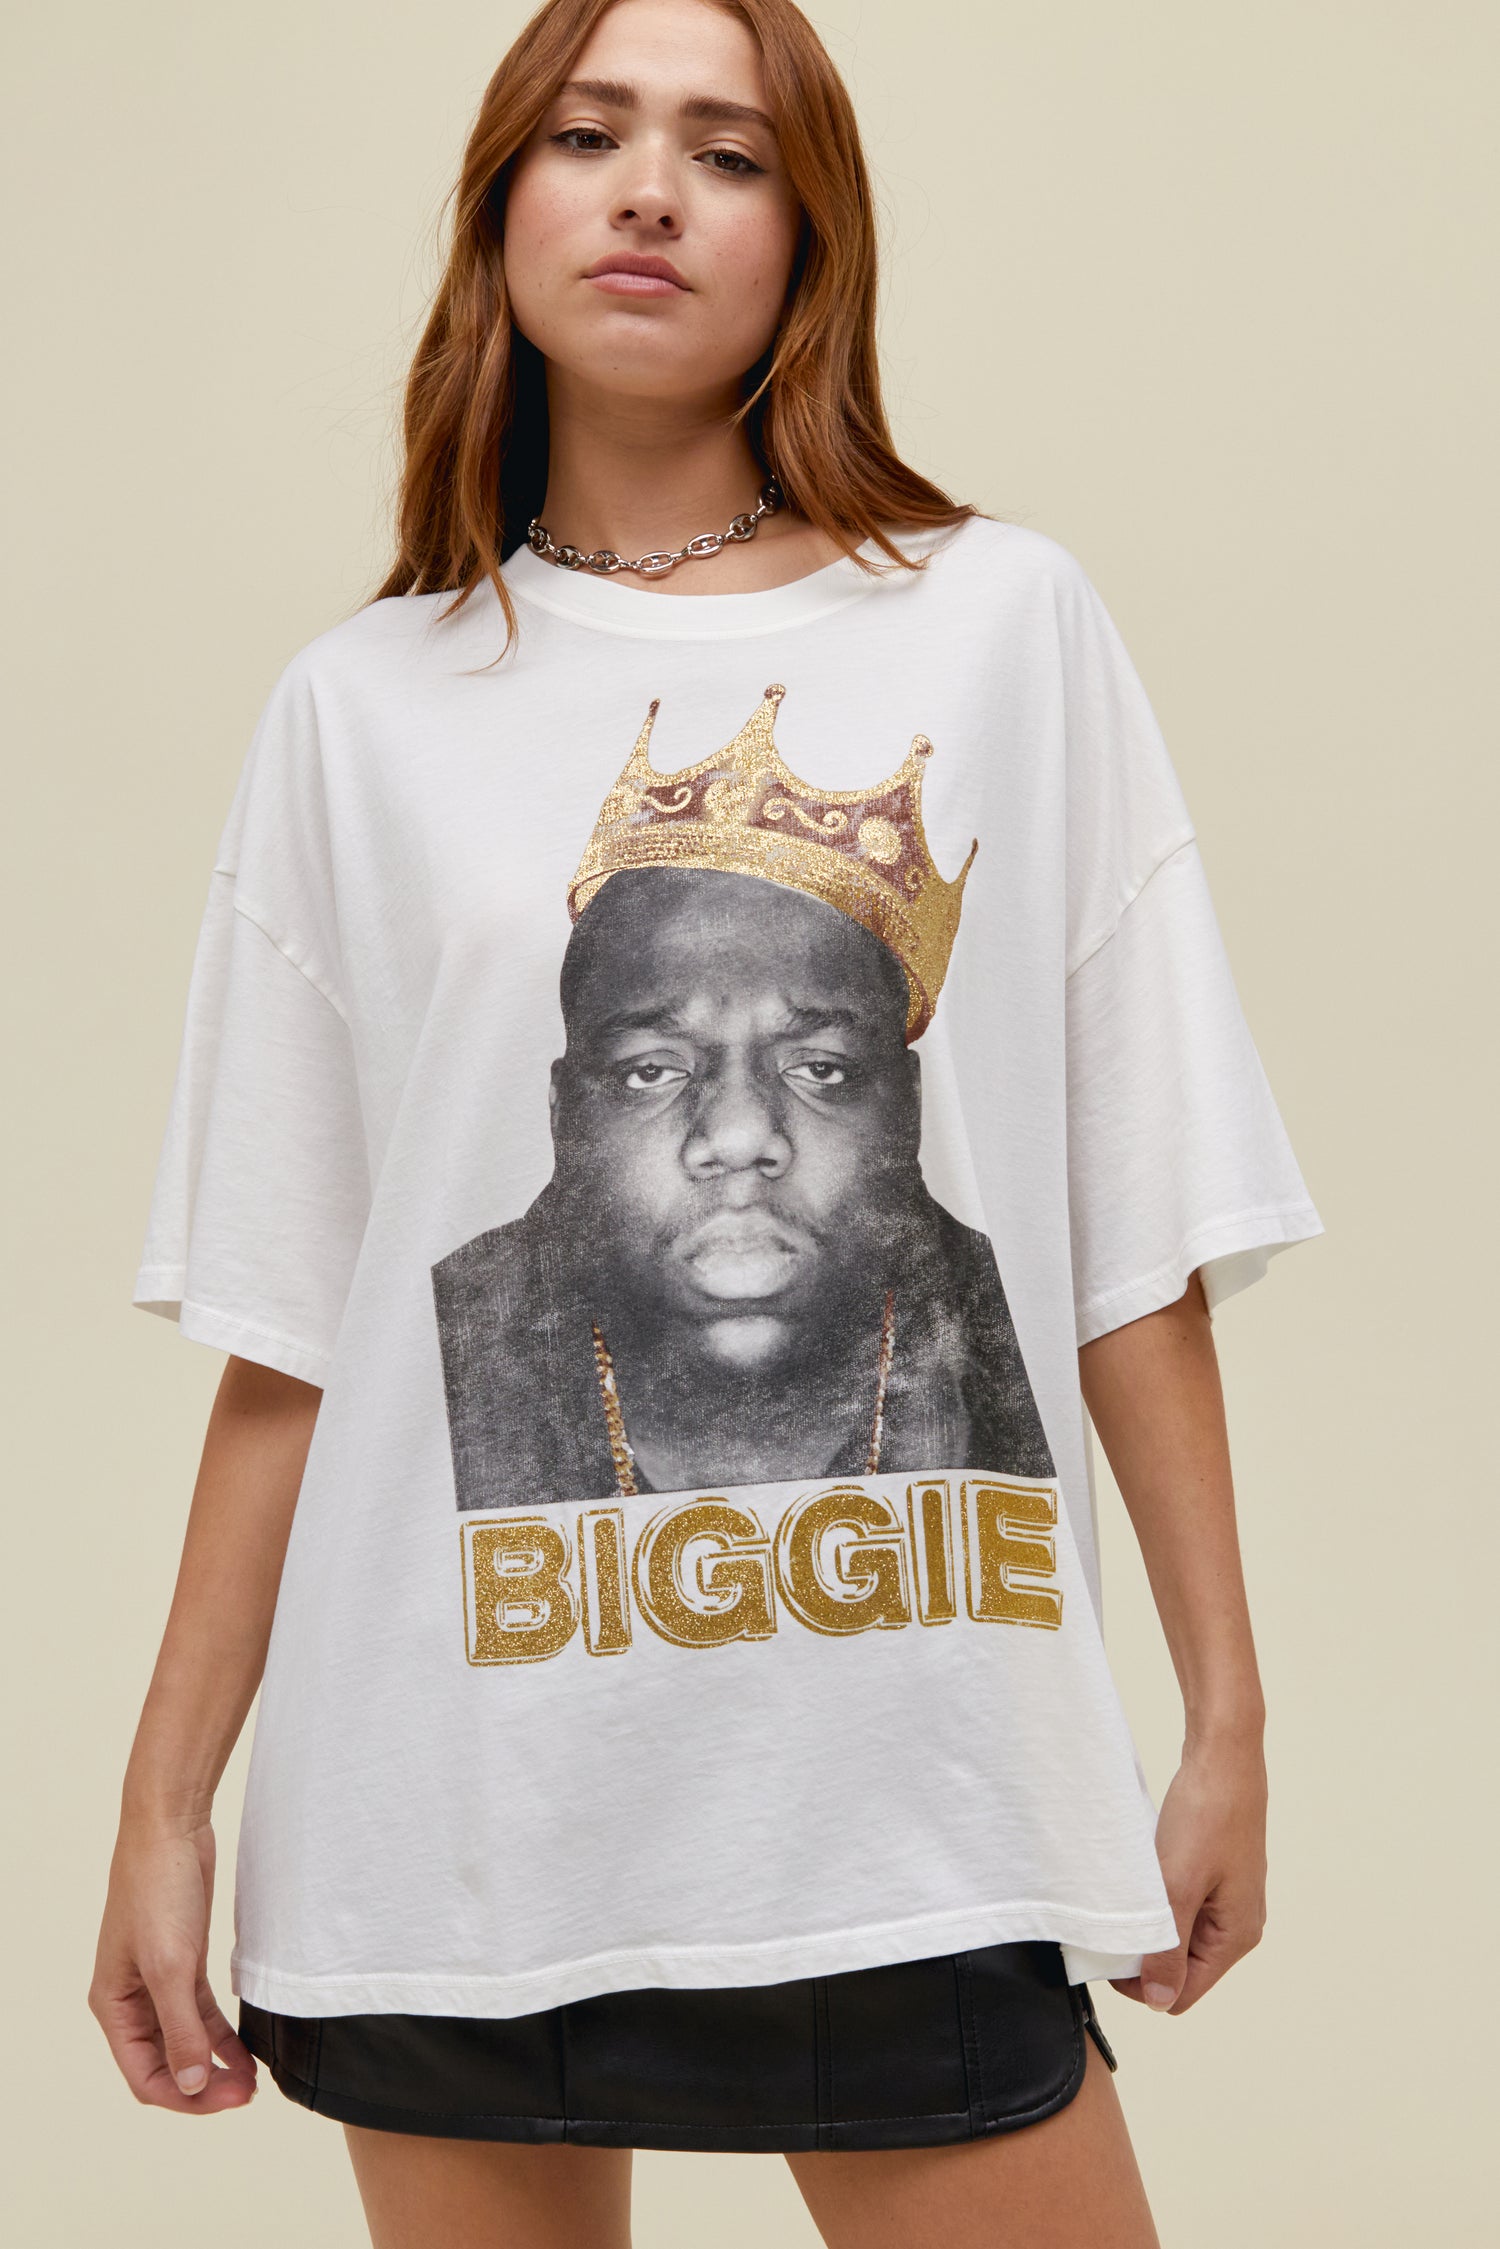 The Notorious B.I.G. Biggie Smalls Sweatshirt 